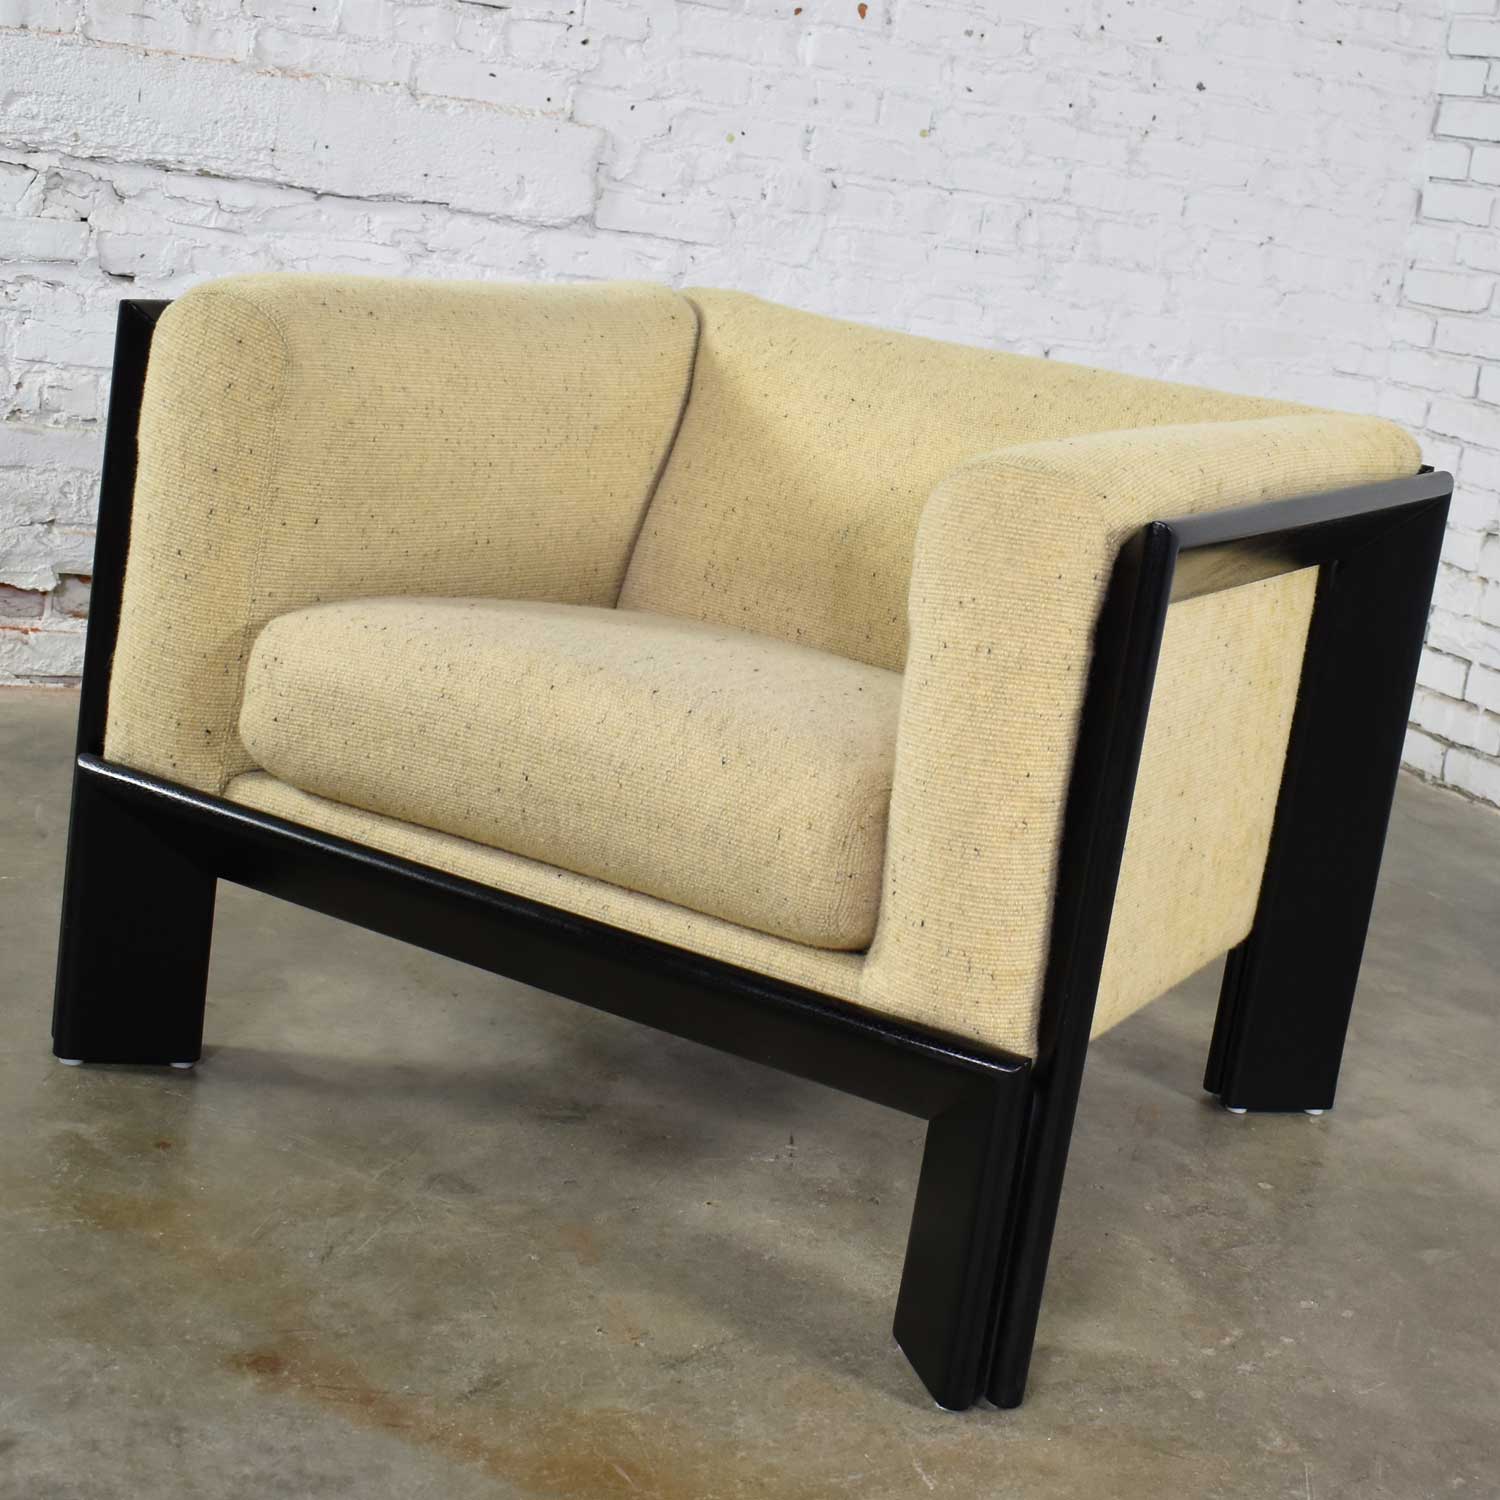 Modern Black & White Cube Club Lounge Chair Metropolitan Furniture Co. San Francisco